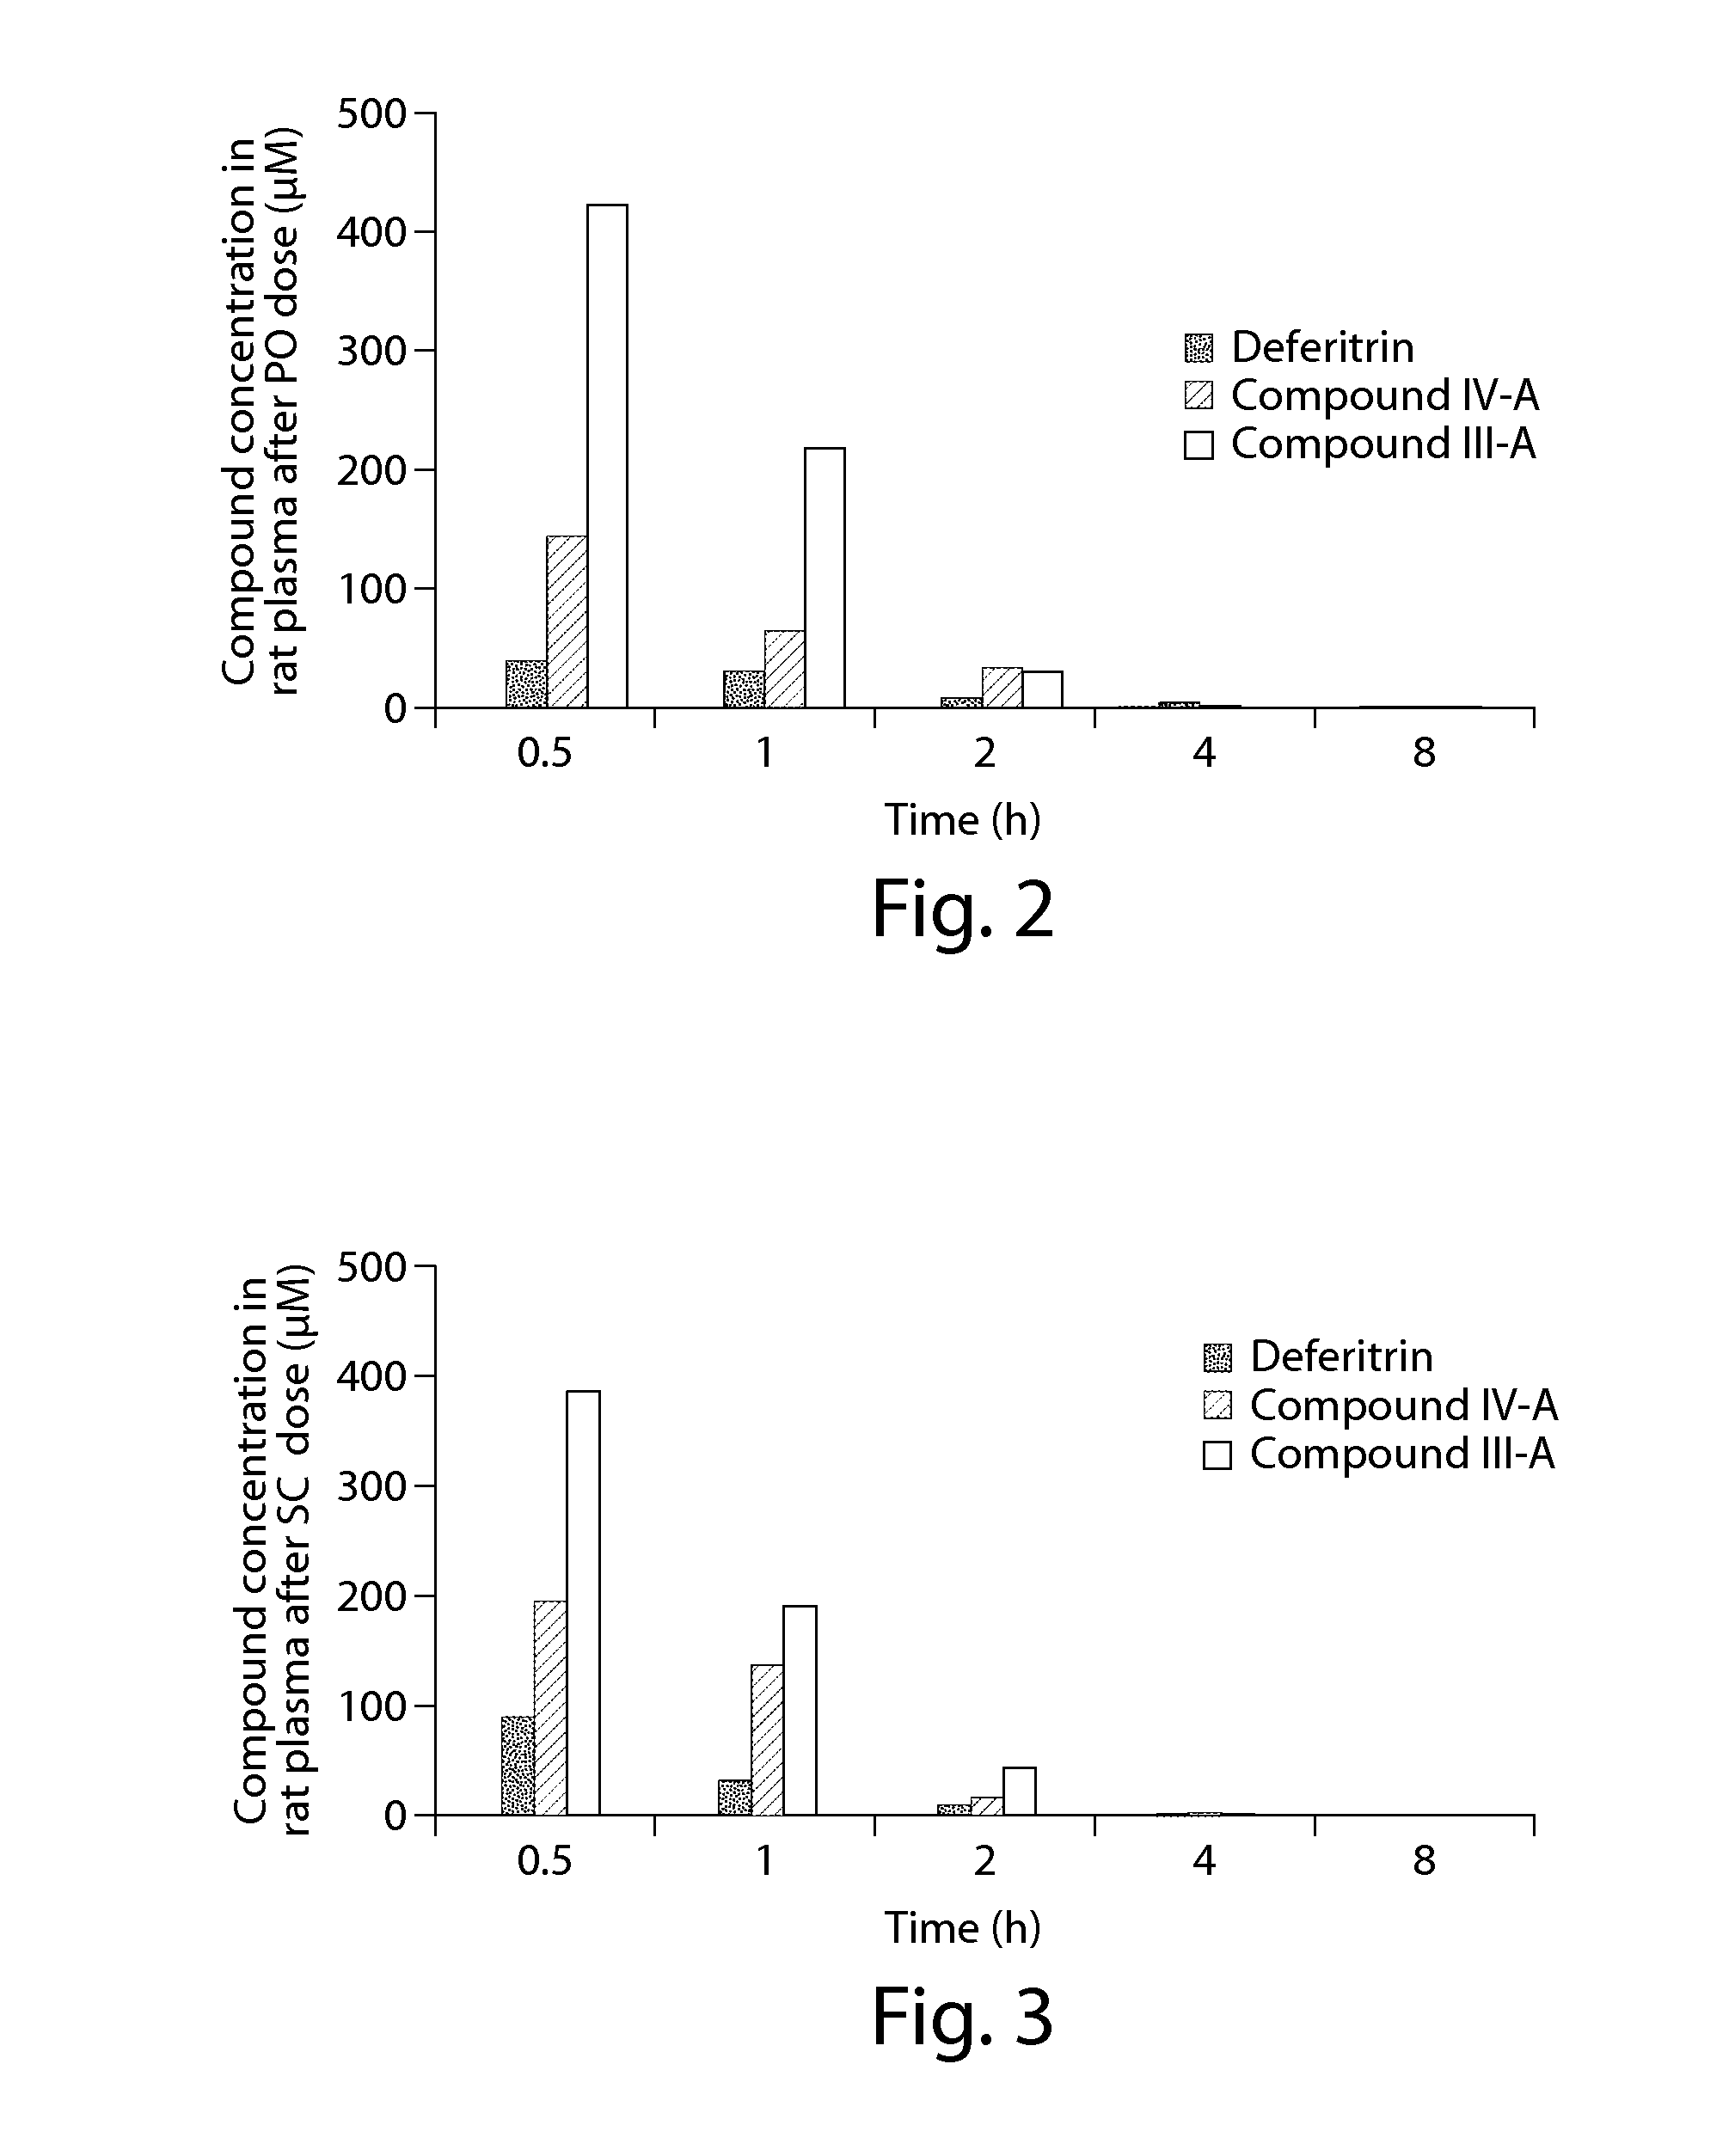 Uses of 4'-desferrithiocin analogs